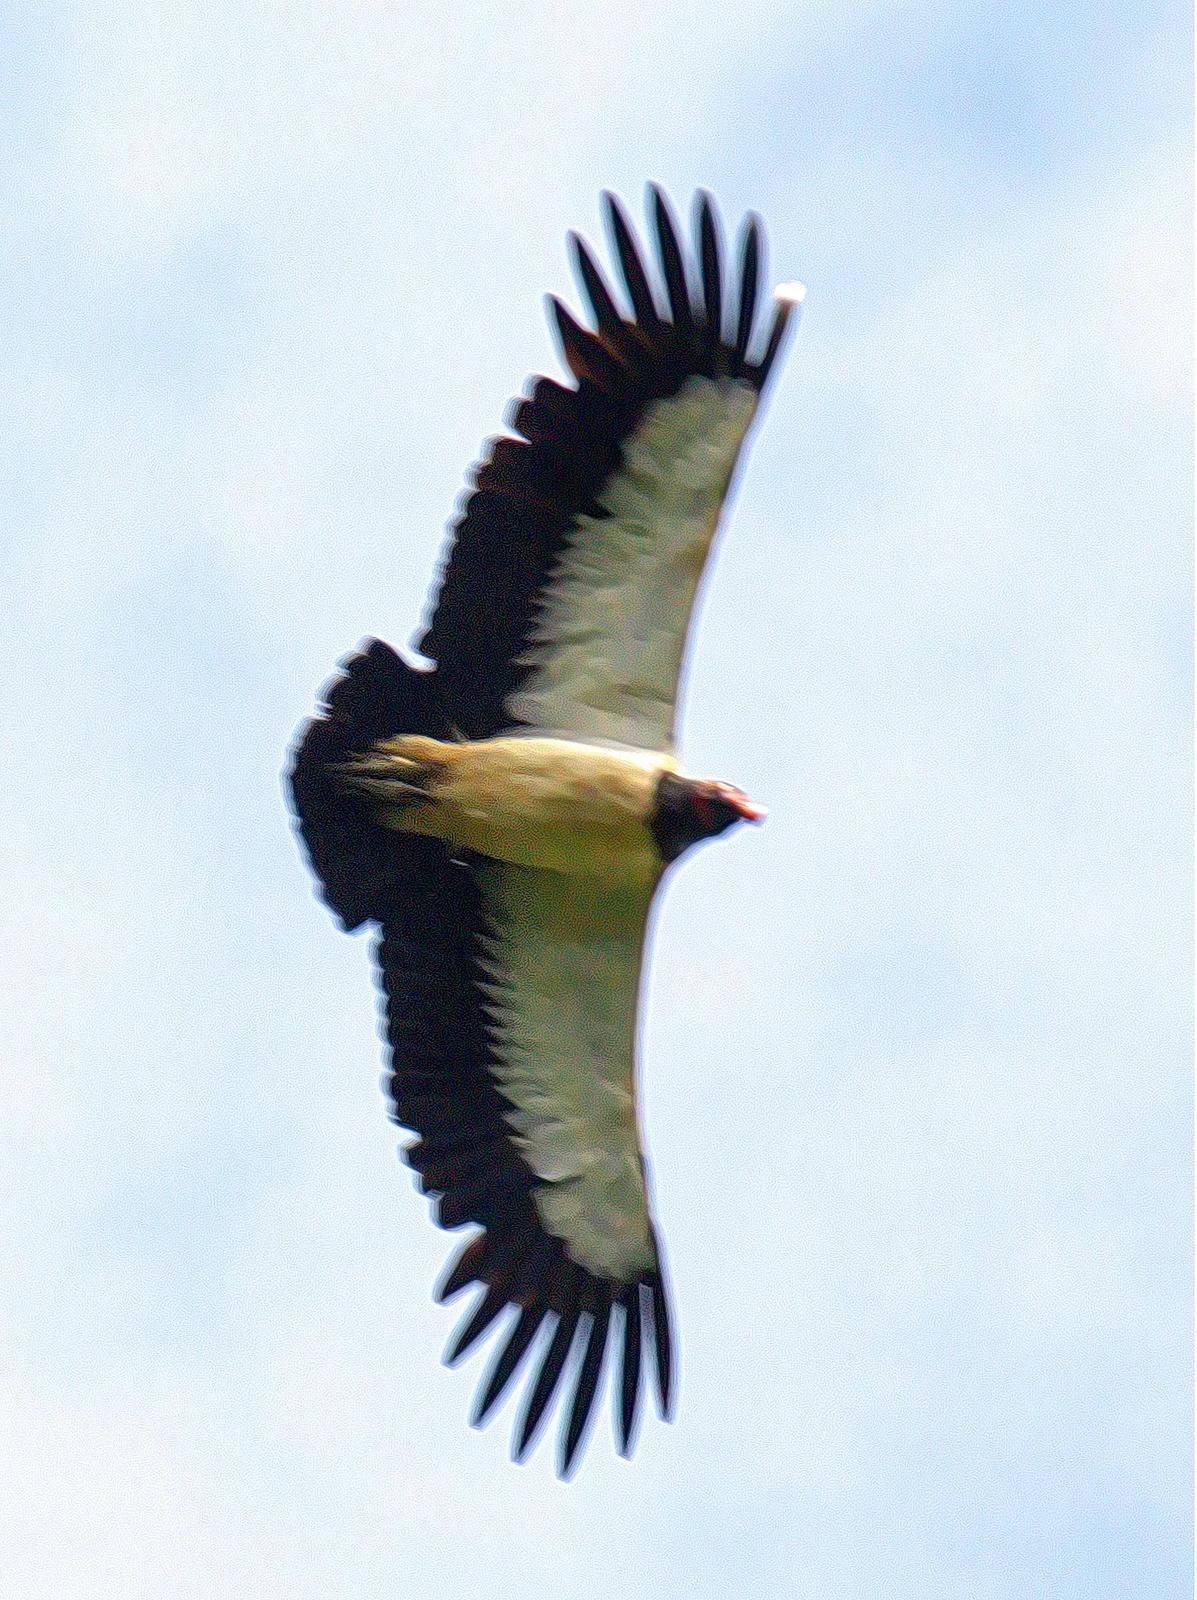 King Vulture Photo by Dan Tallman